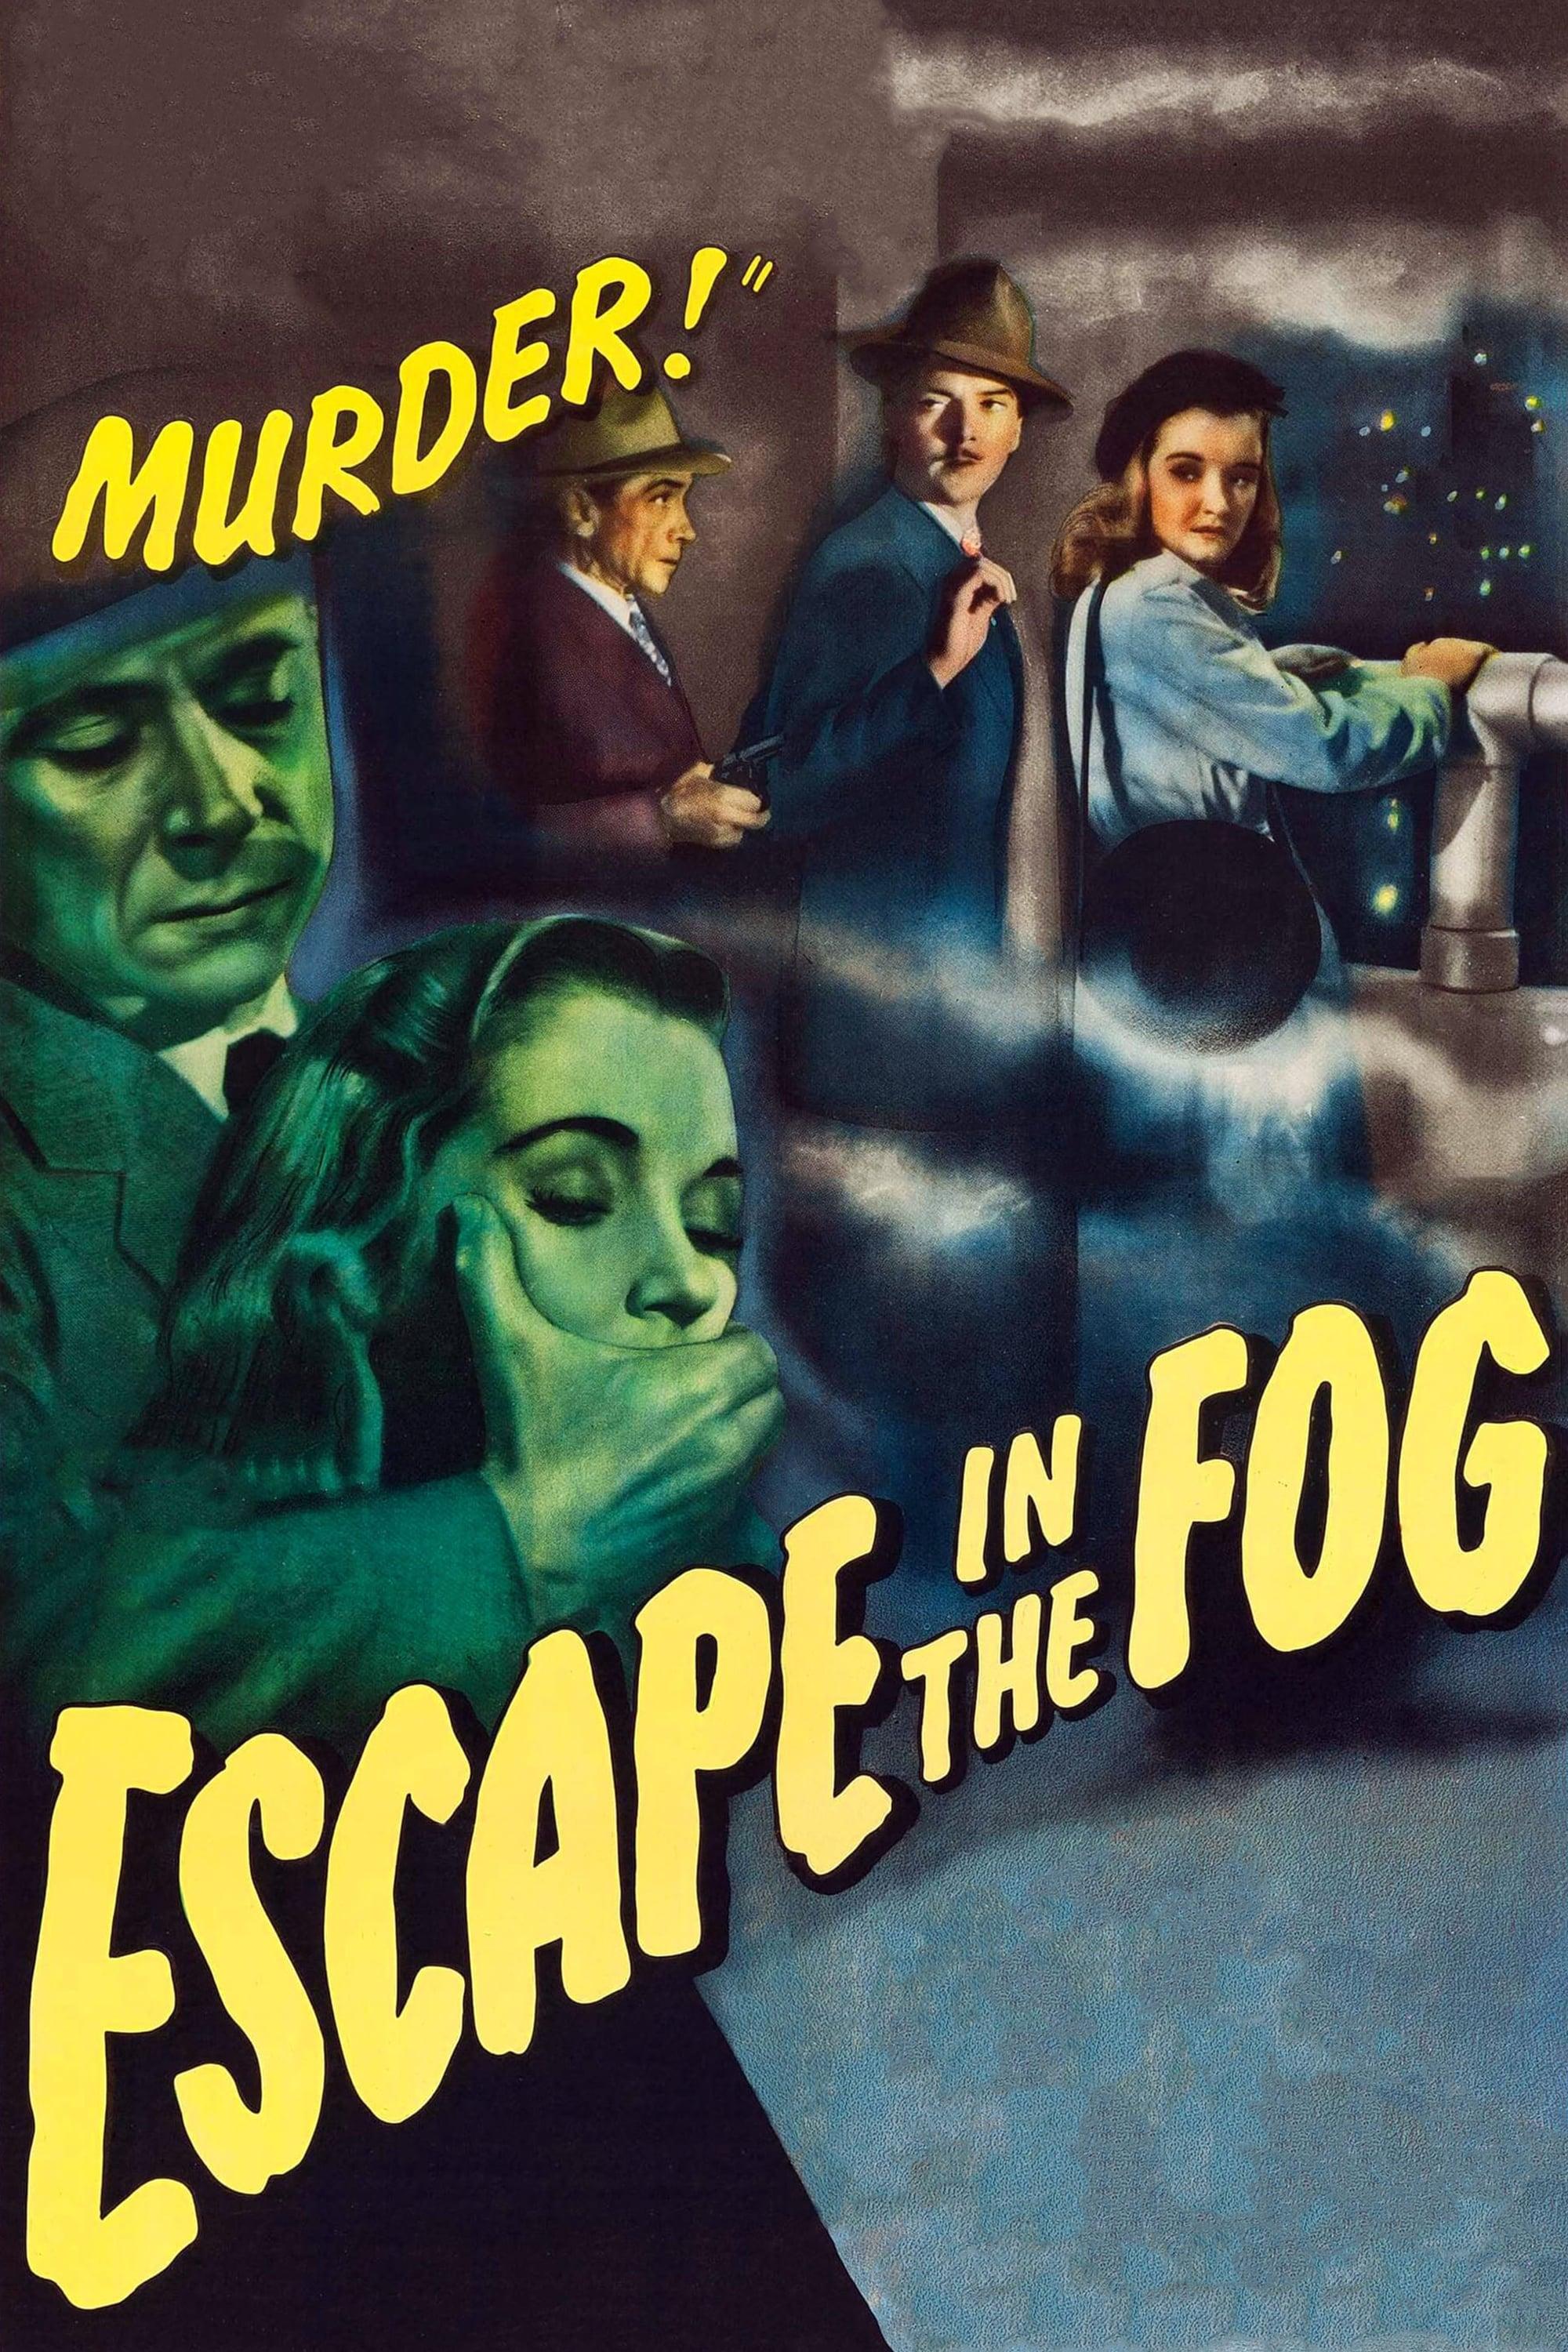 Escape in the Fog poster